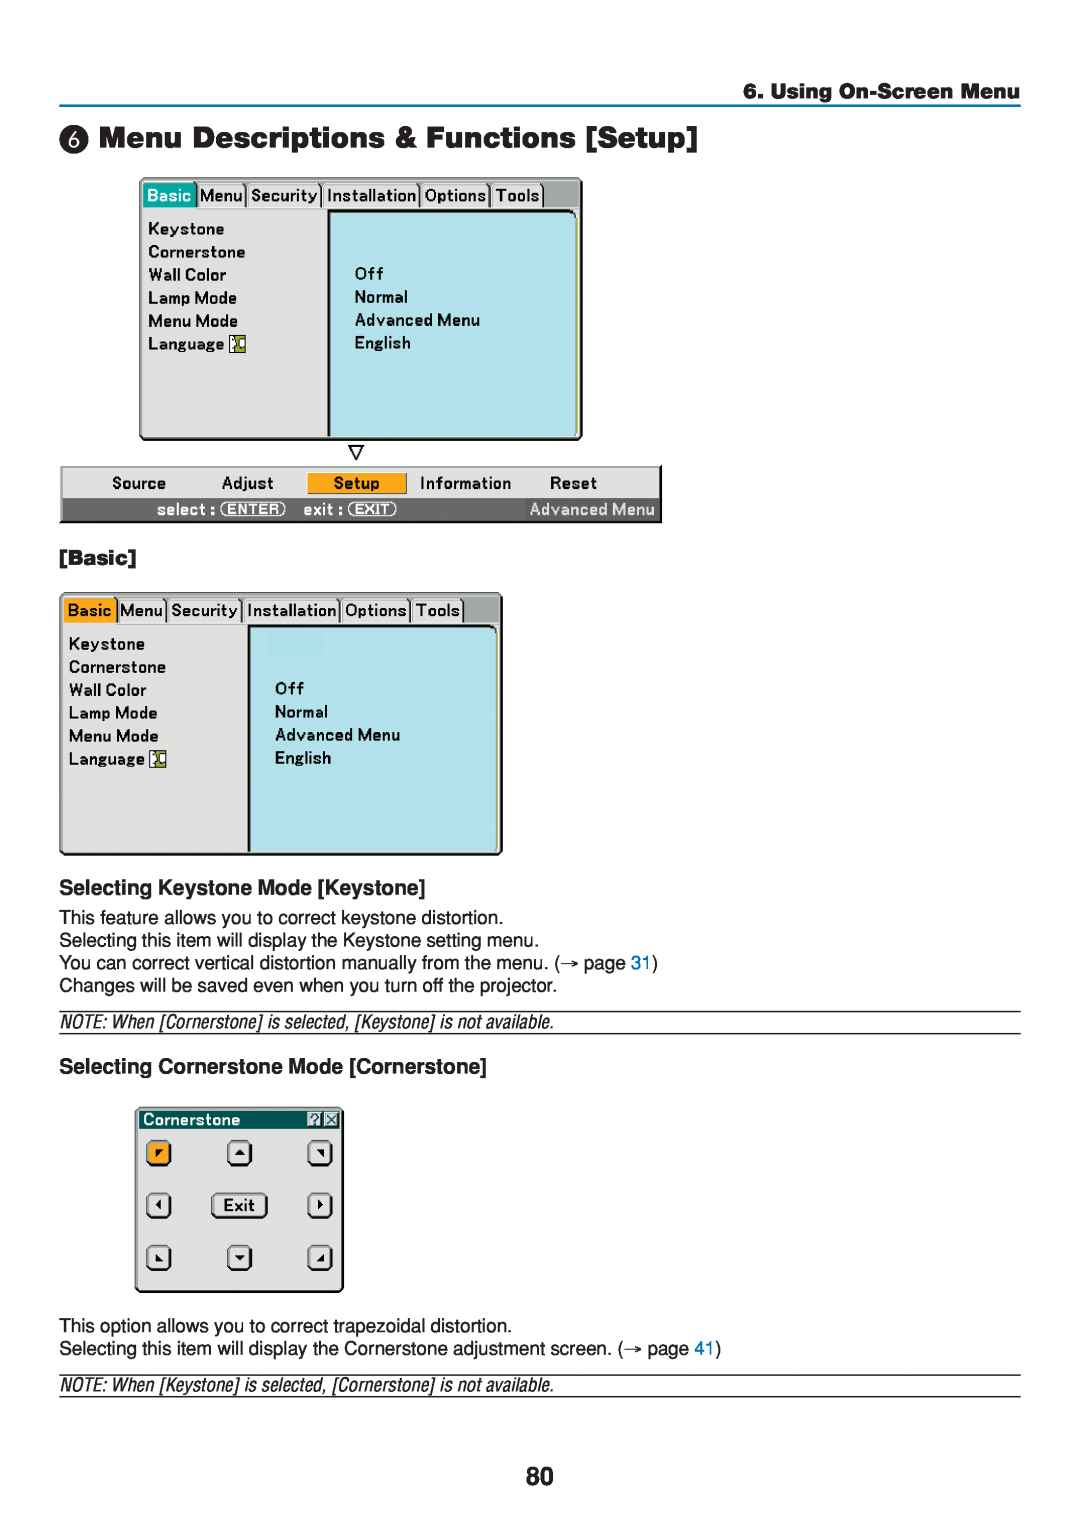 Dukane 8808 user manual Menu Descriptions & Functions Setup, Basic, Selecting Keystone Mode Keystone, Using On-Screen Menu 